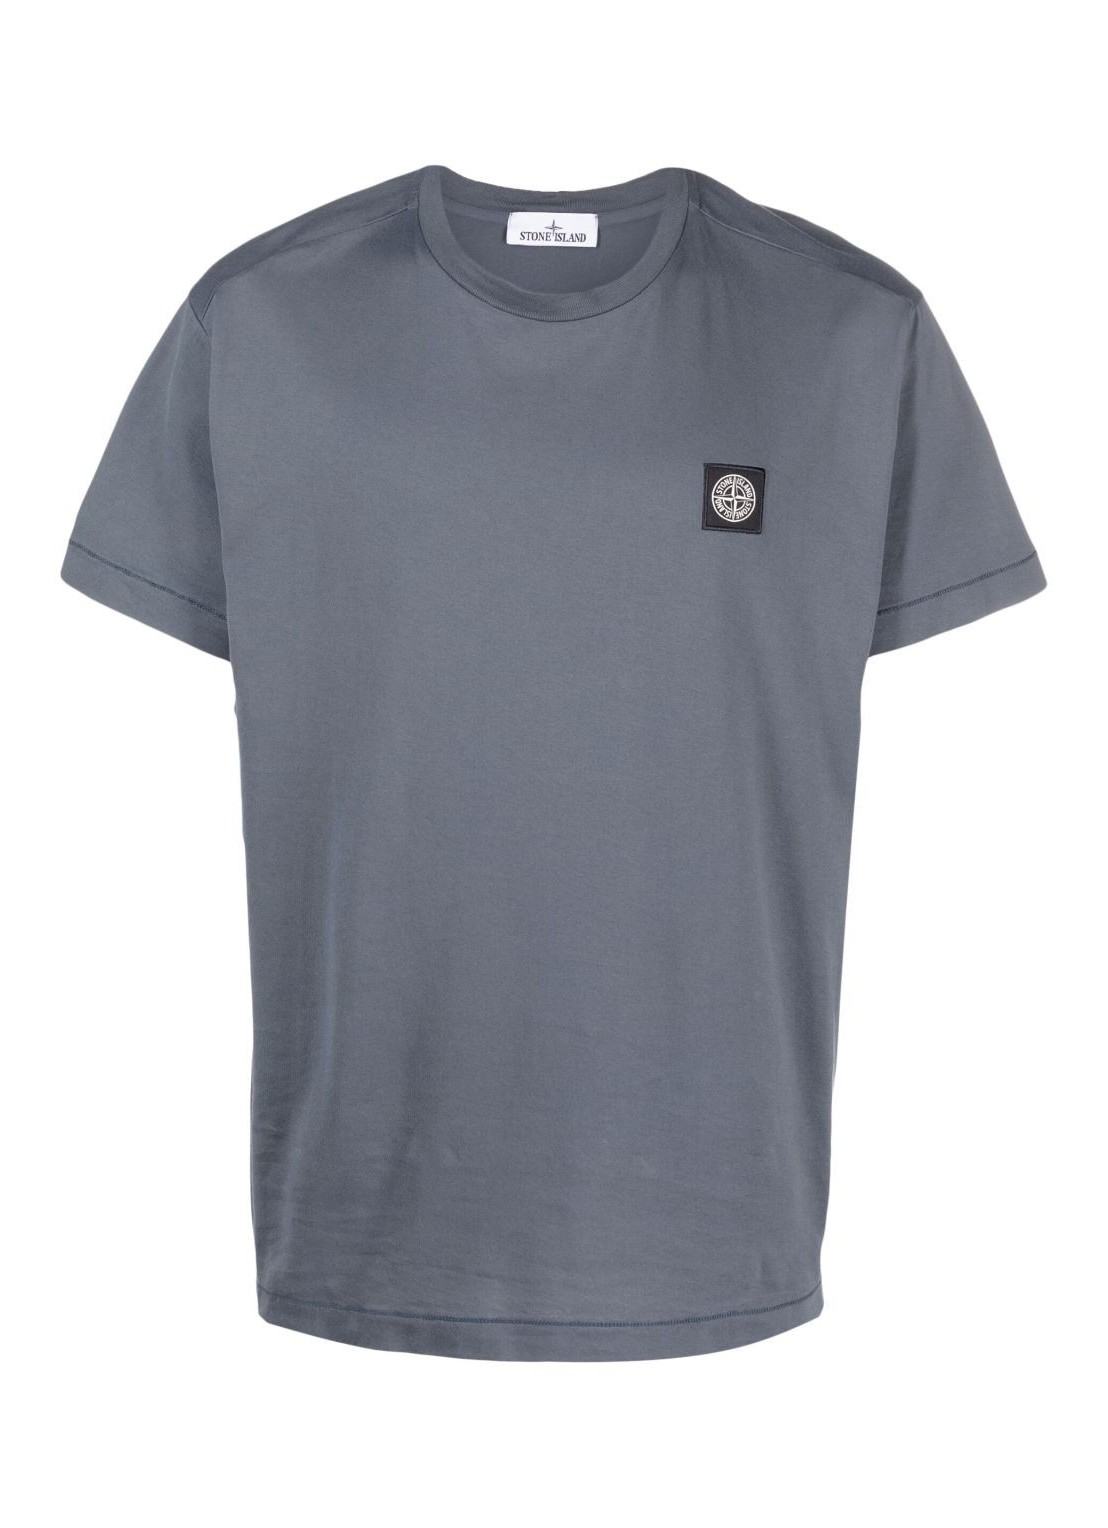 Camiseta stone island t-shirt man t shirt 791524113 v0062 talla gris
 